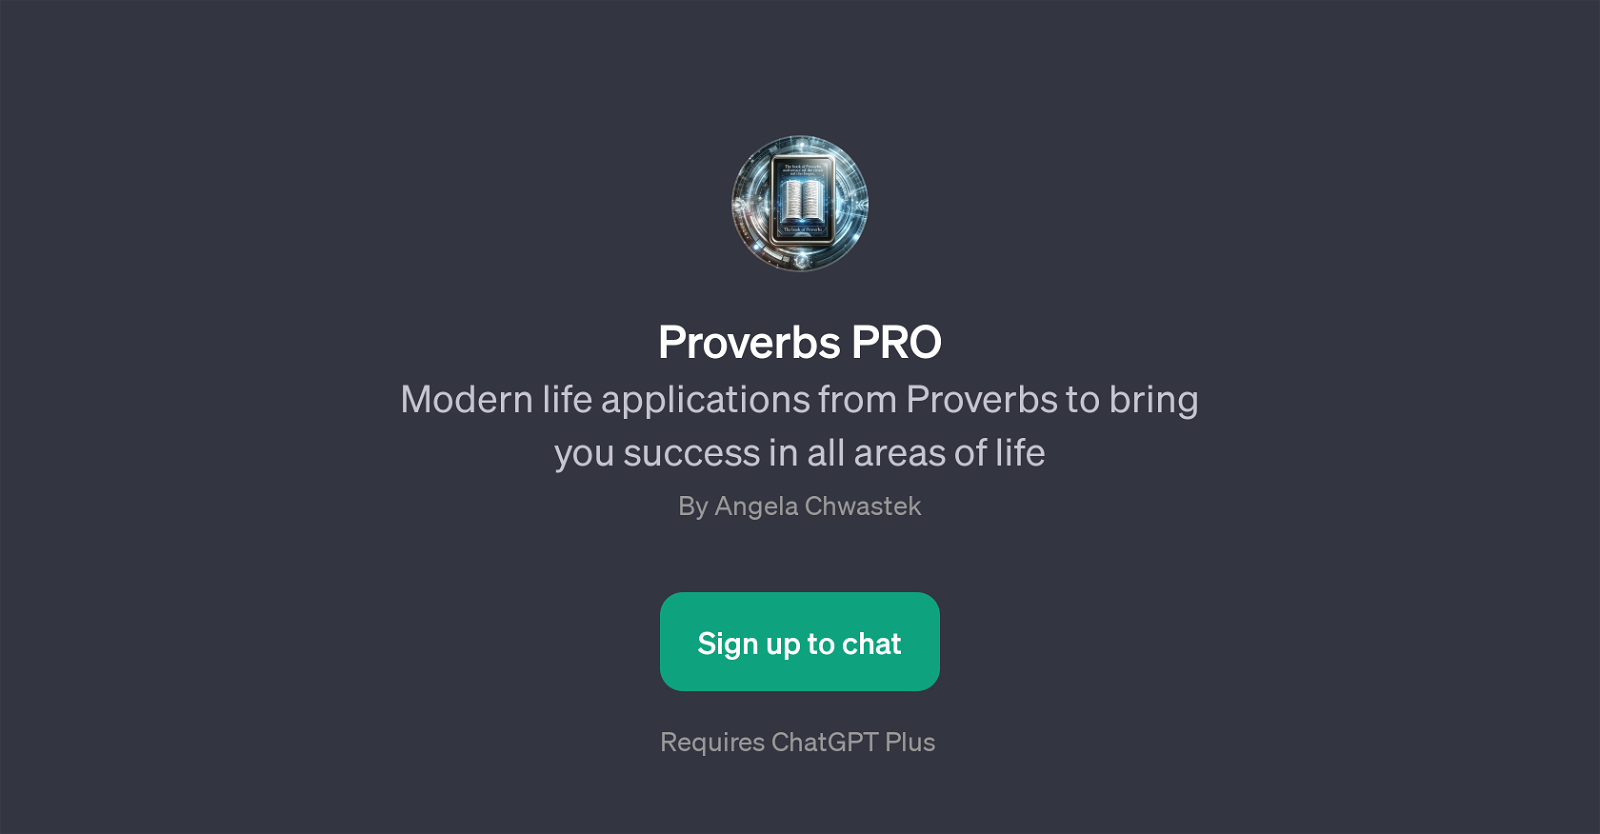 Proverbs PRO website